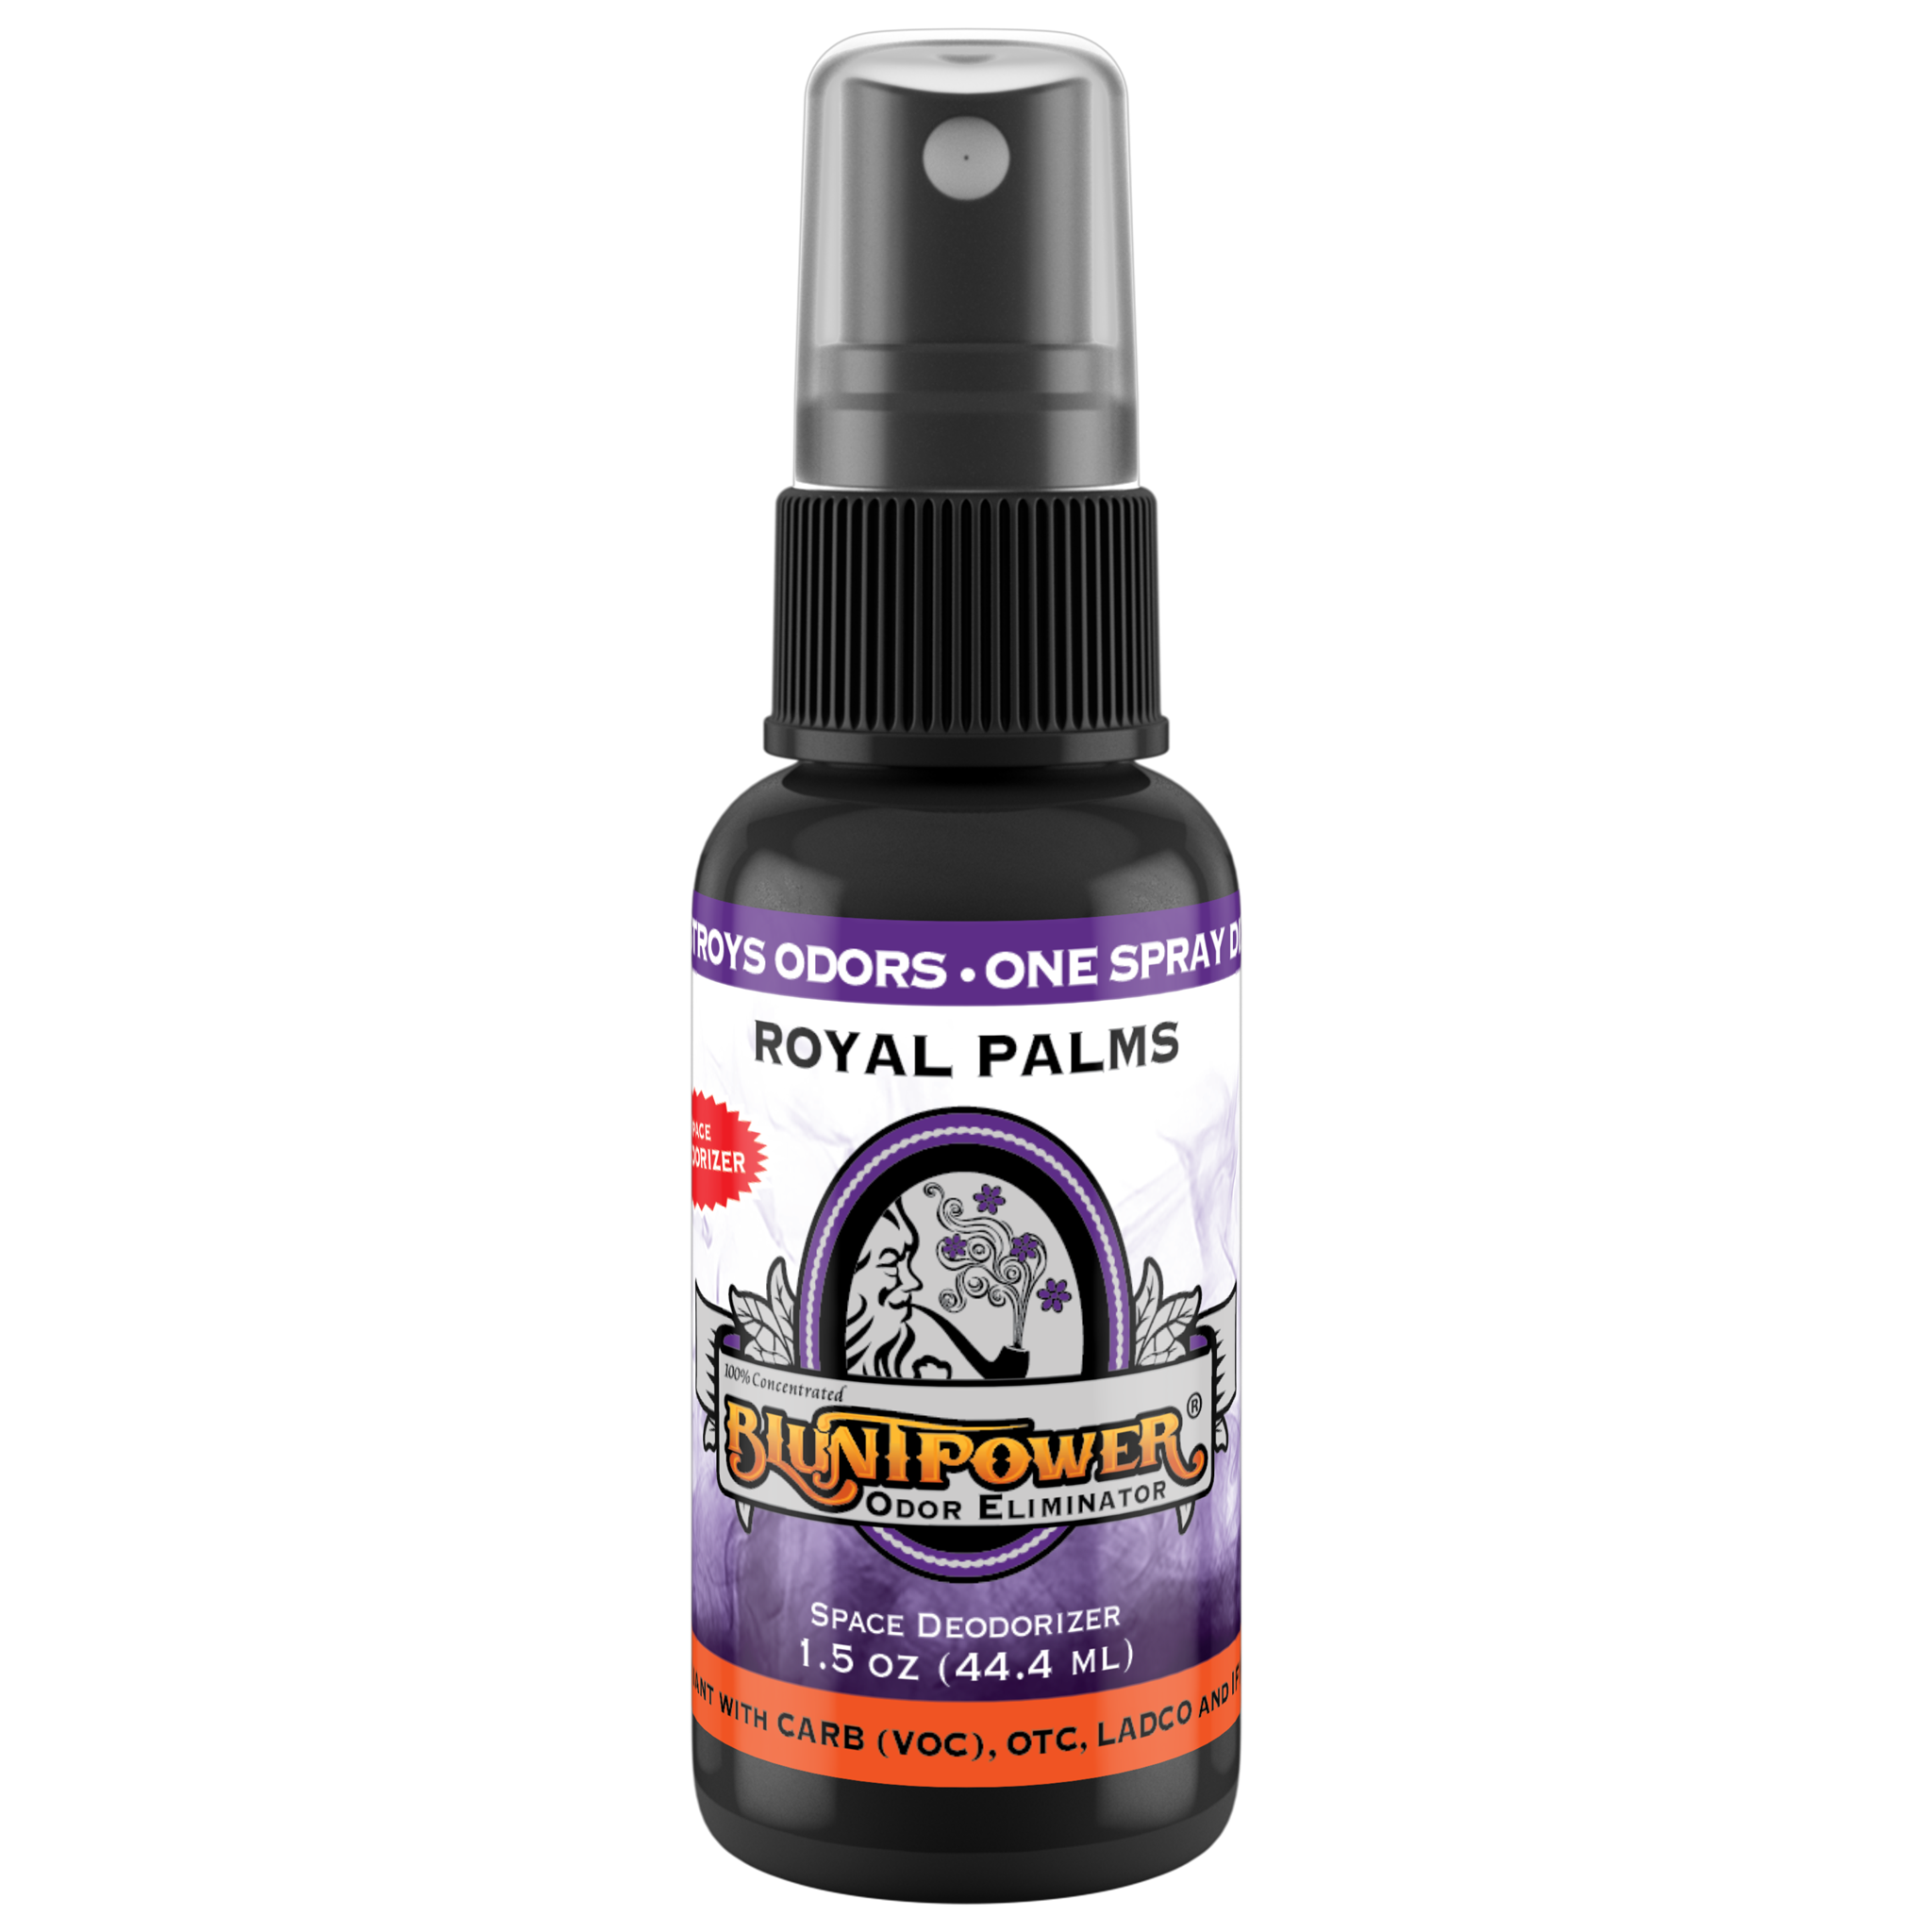 BluntPower Odor Eliminator - Royal Palms Scent Size: 1.5 fl oz